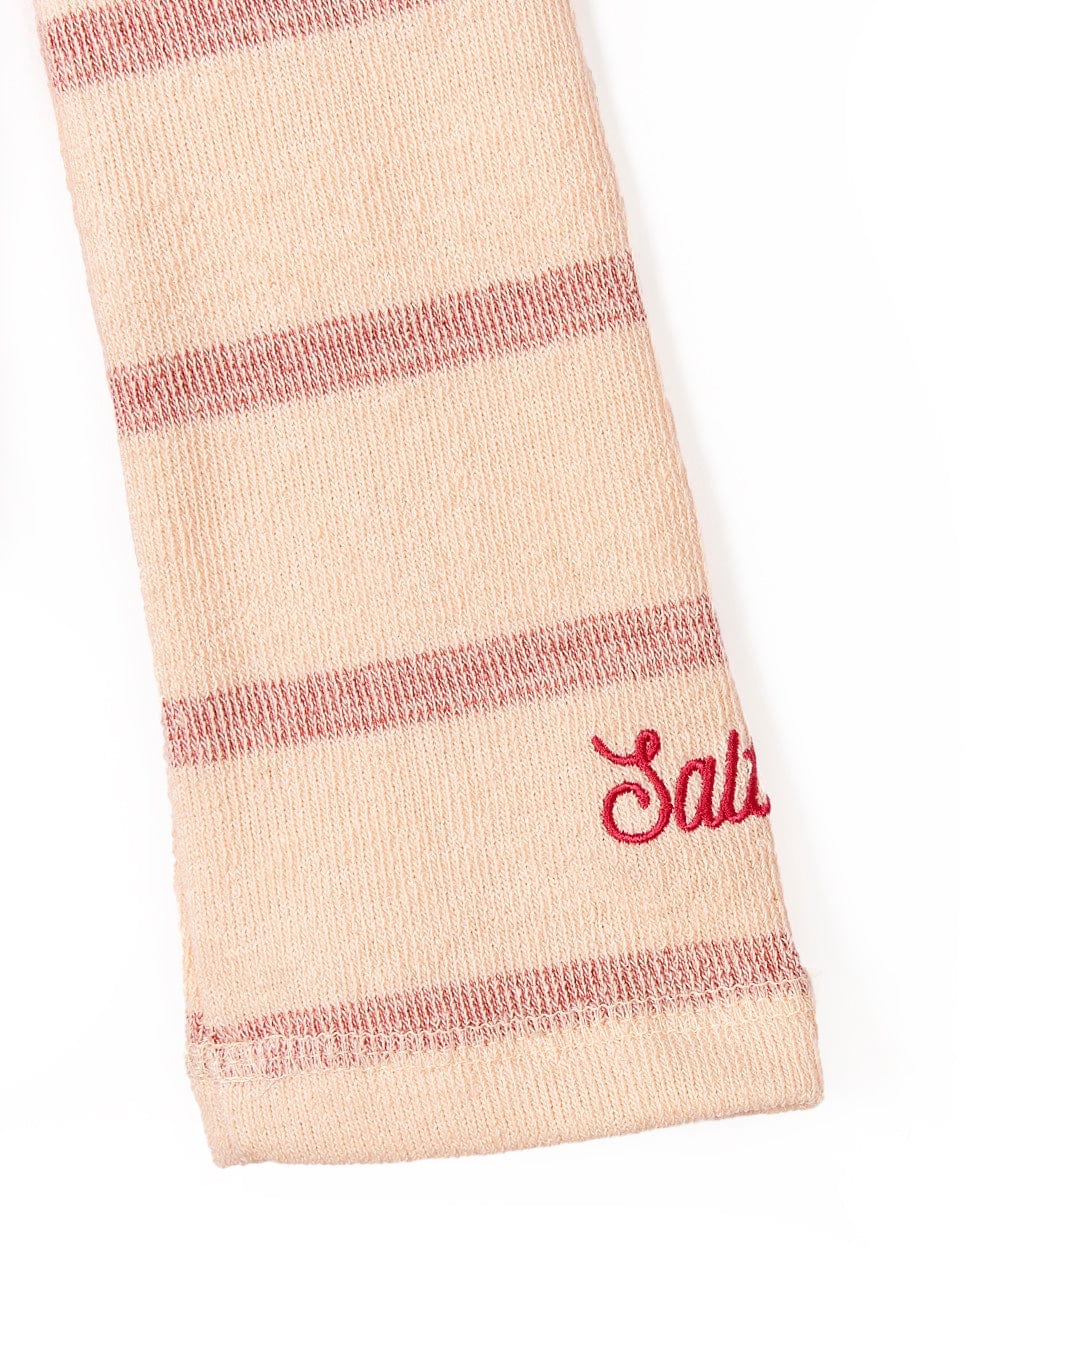 A Kennedy - Kids Pop Hoodie - Coral Saltrock sock with the word salud written on it.